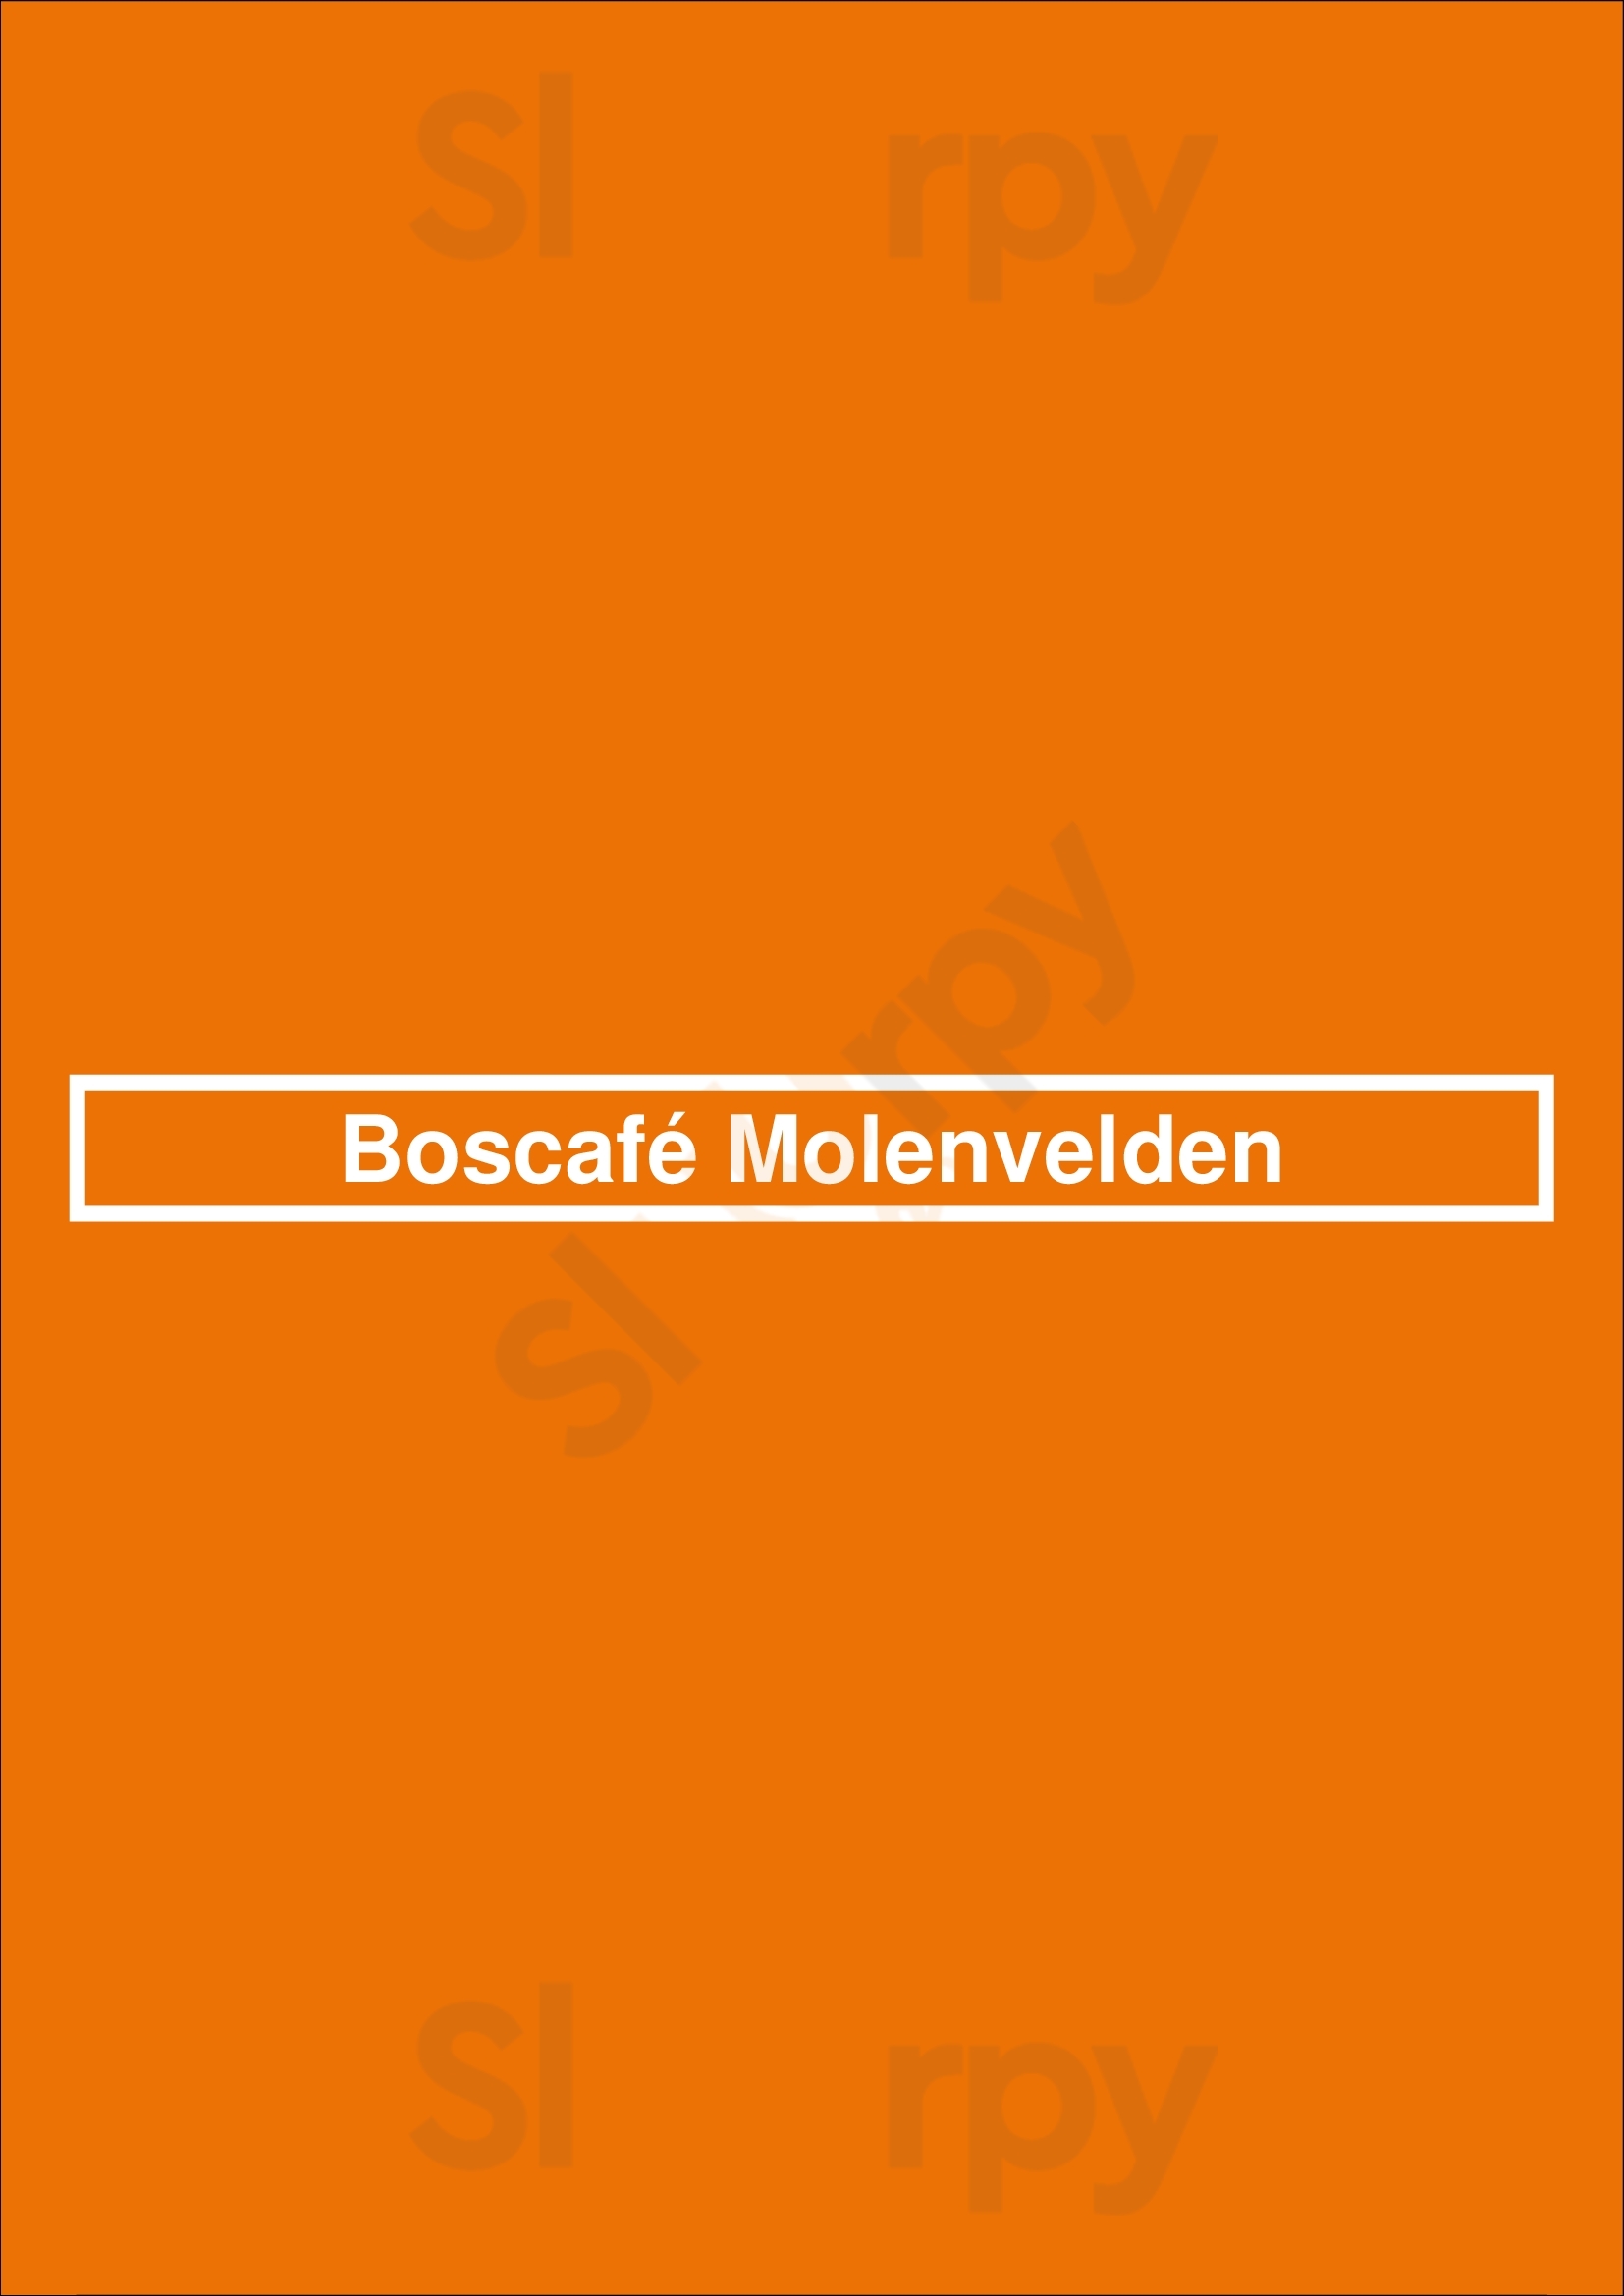 Boscafé Molenvelden Veldhoven Menu - 1